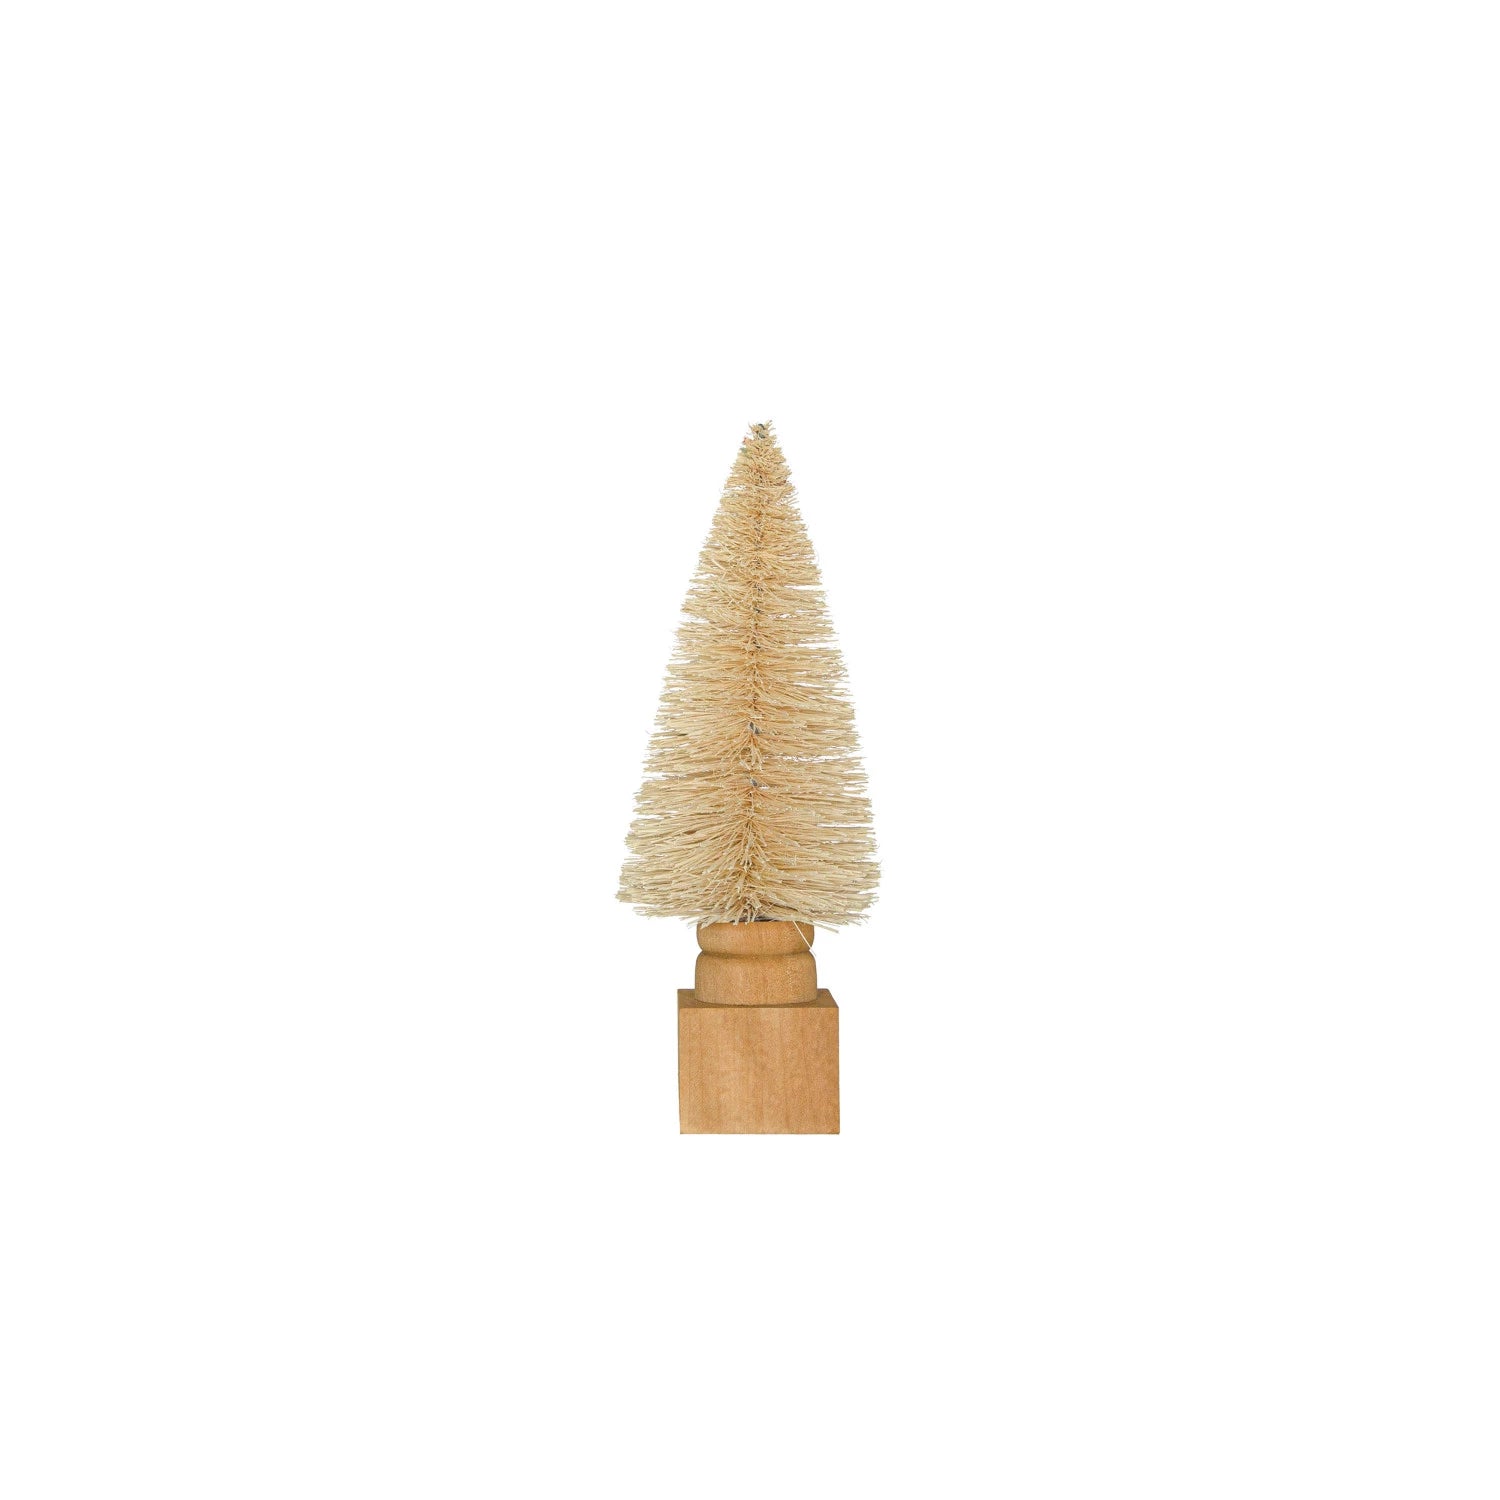 Bottle Brush Tree w/ Carved Wood Base, Cream Color, 8"